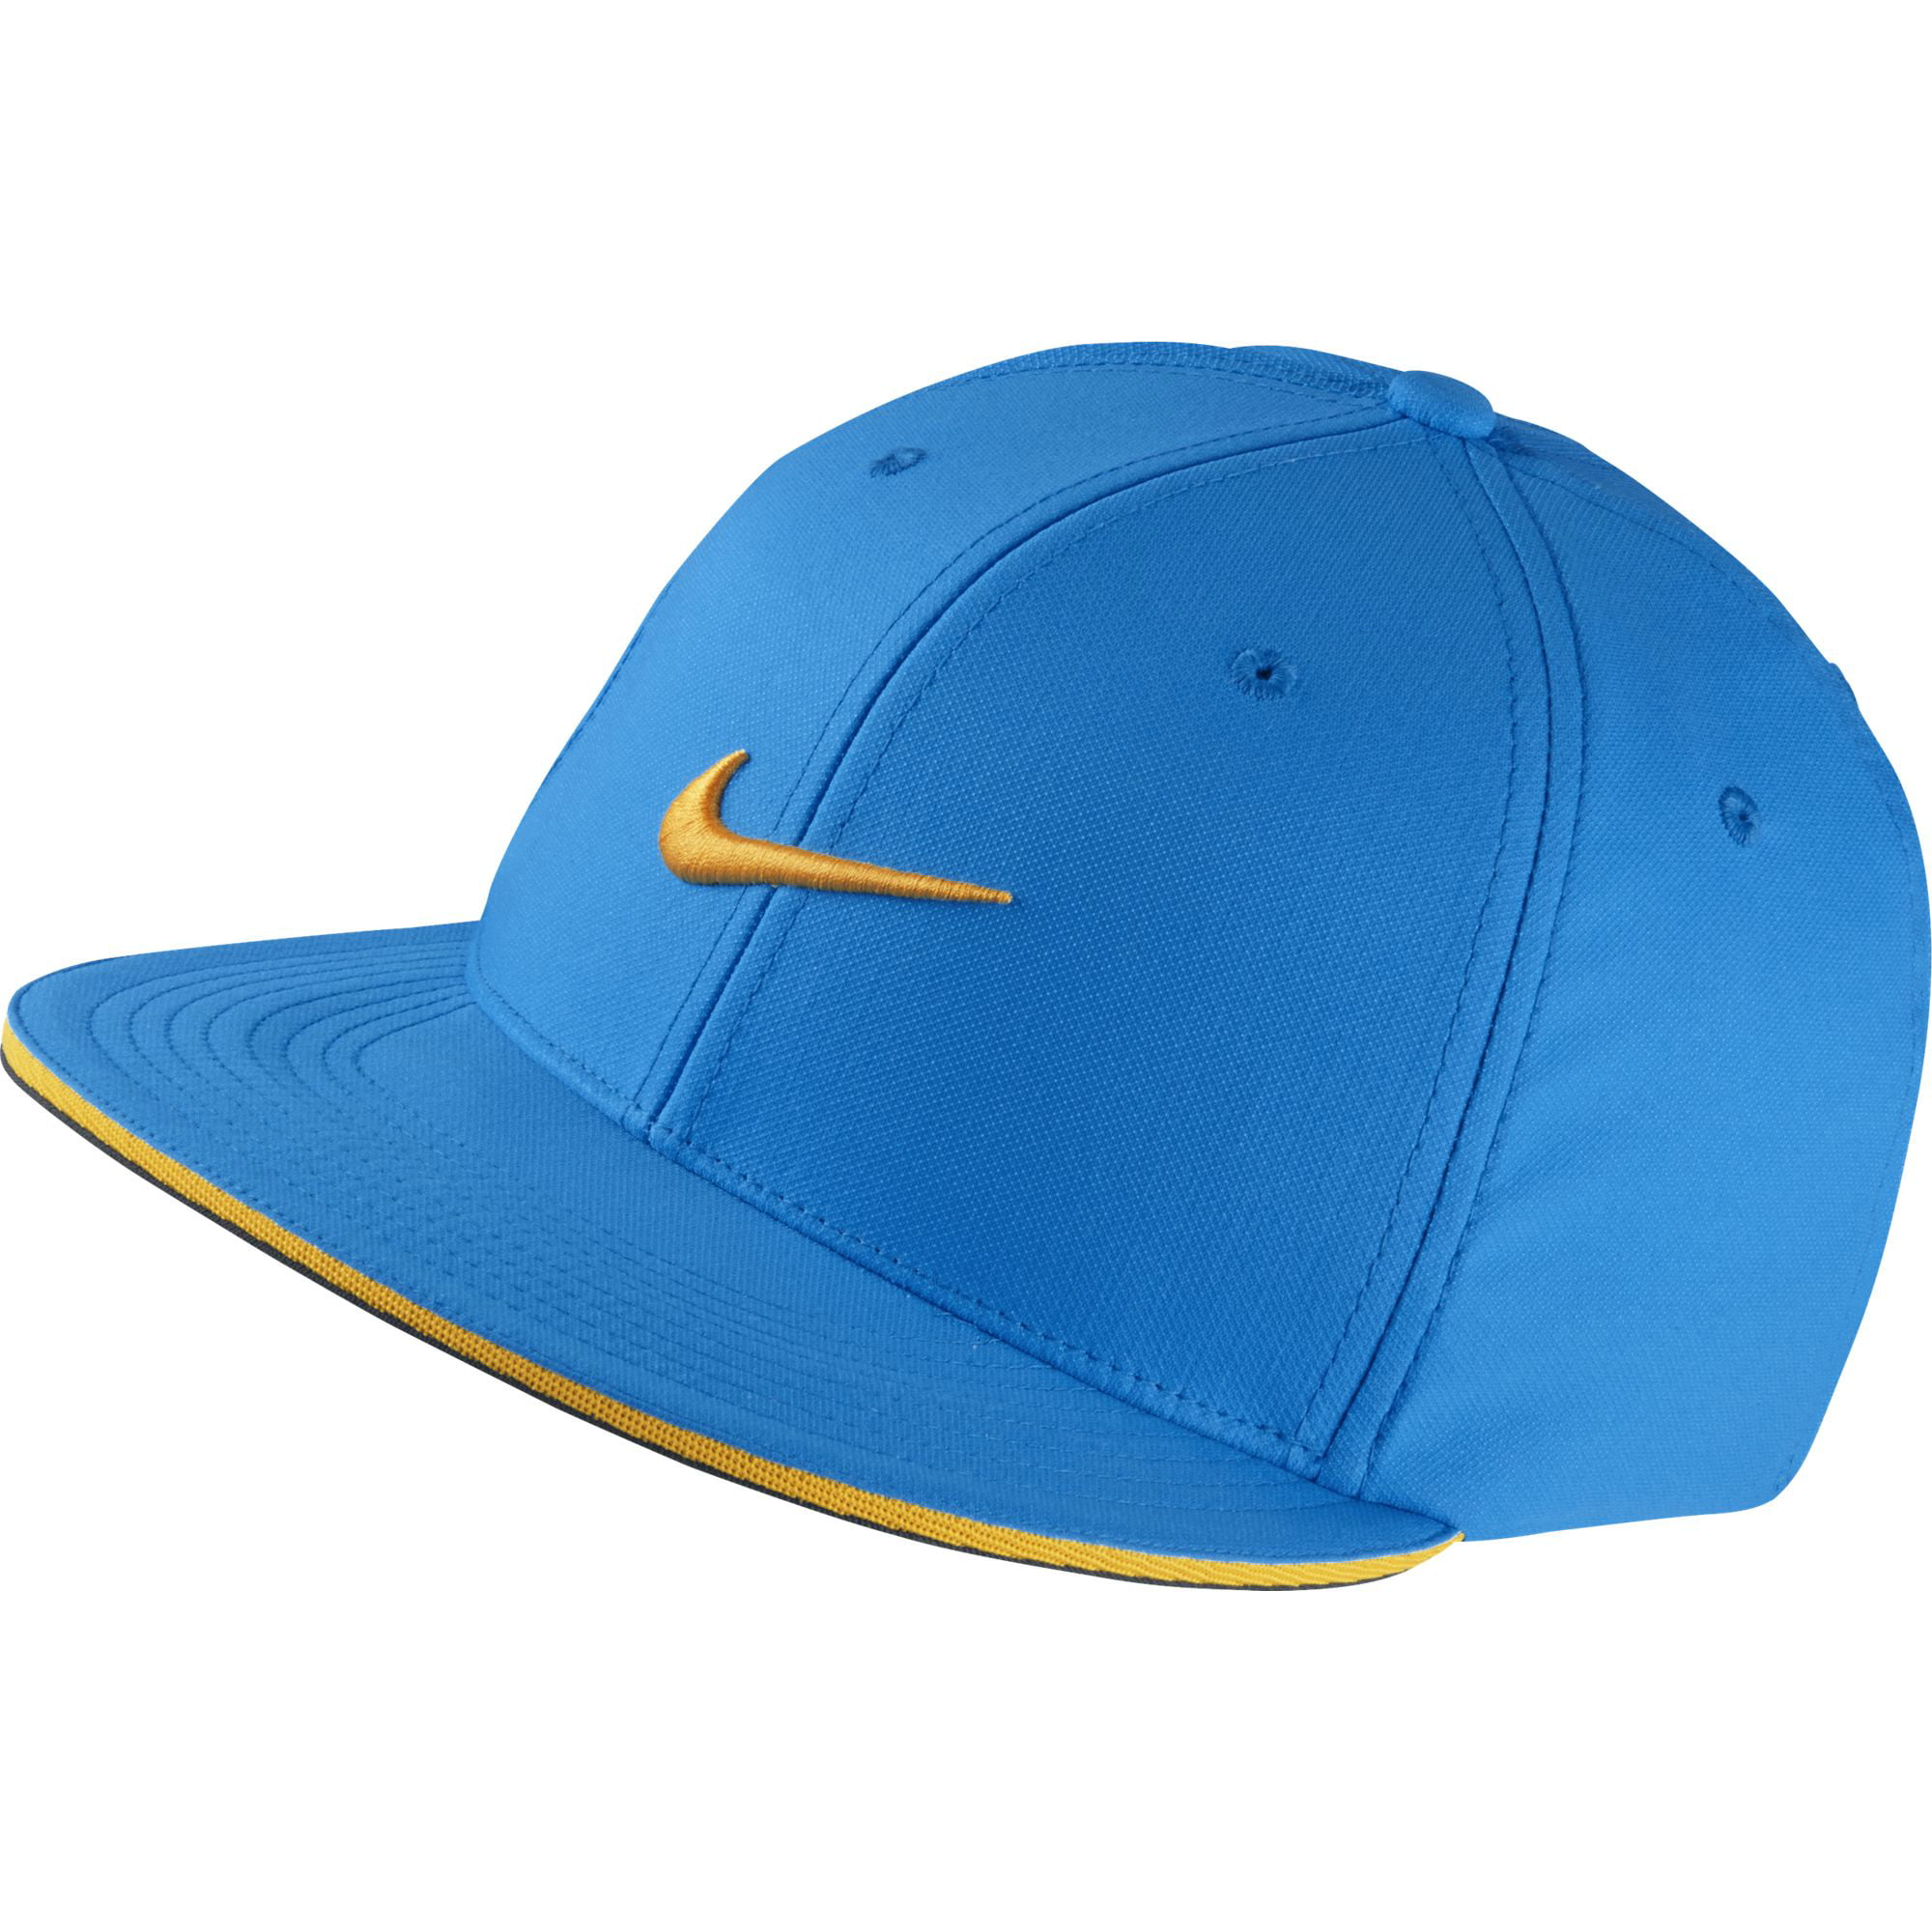 Cap Nike Flat. Bidens cap Nike. Nike cap legit. Coach Signature Flat Brim hat.